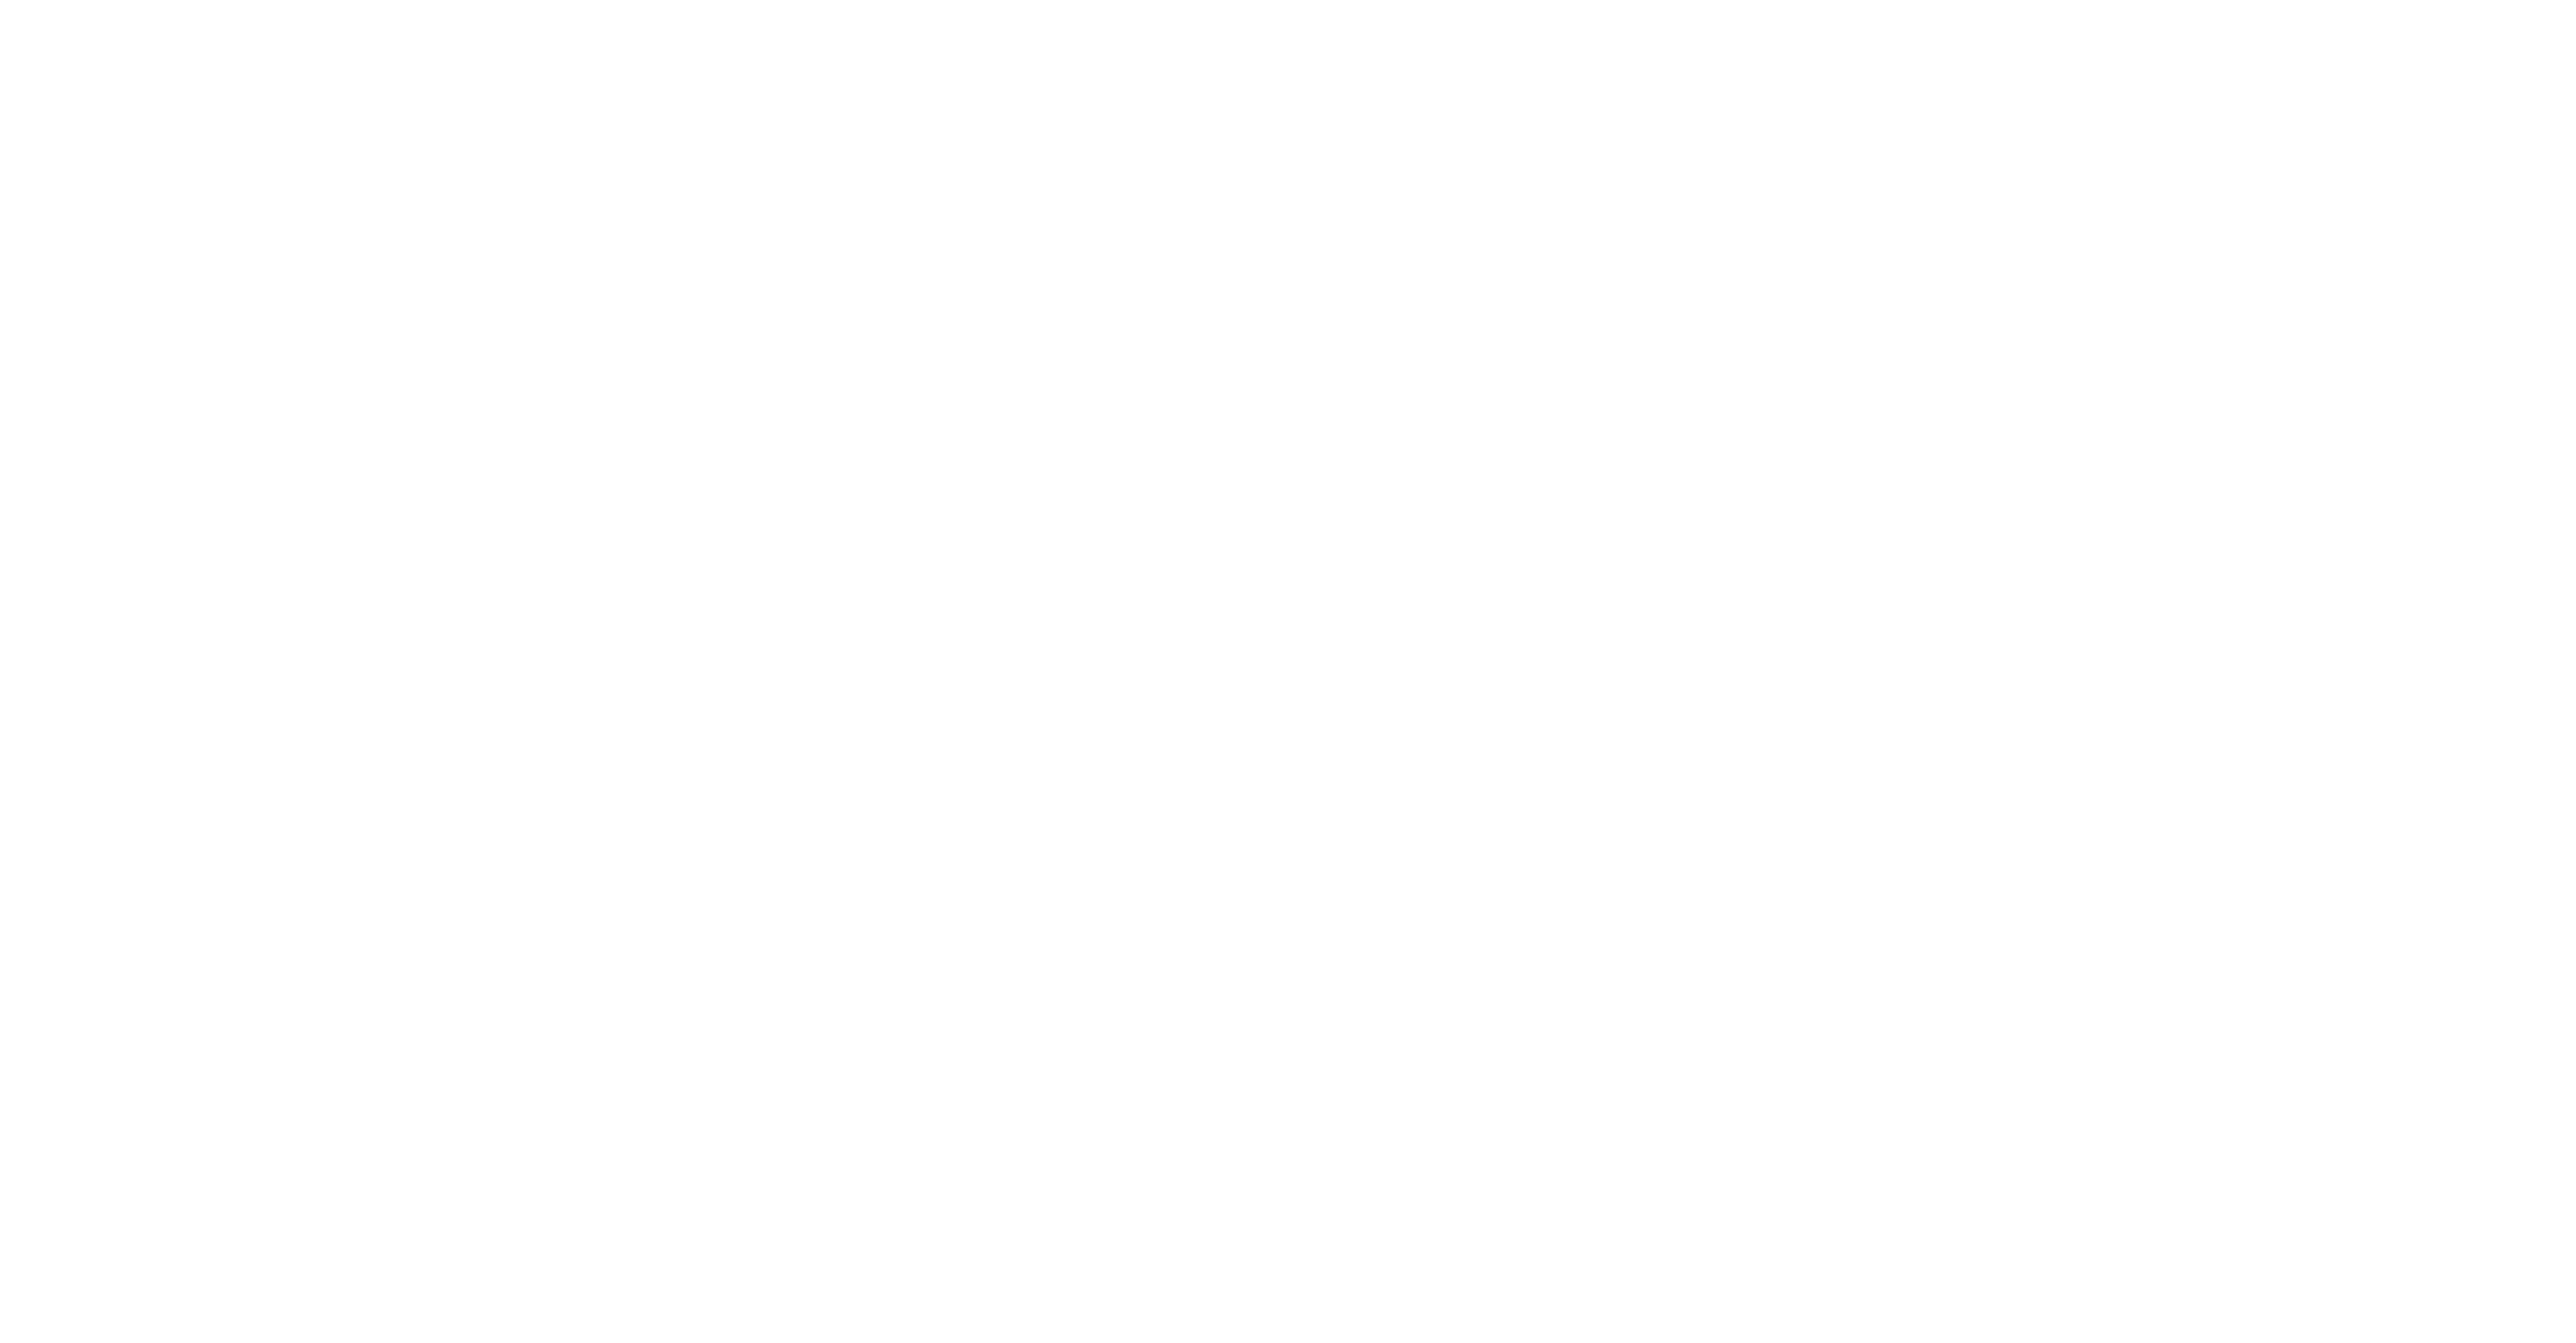 All Night Entertainment